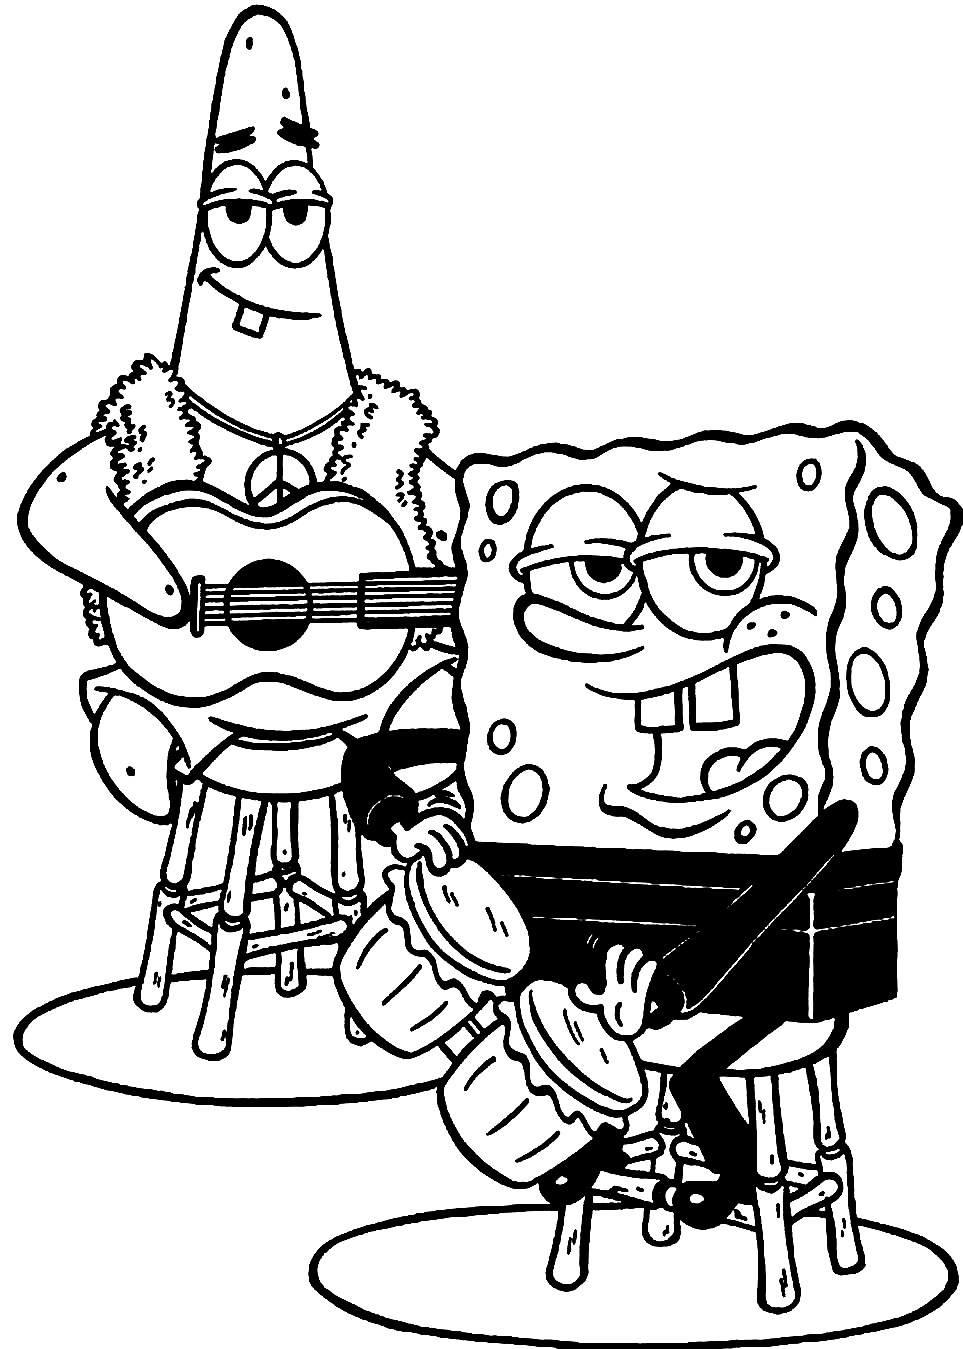 Patrick And Spongebob 1 from Spongebob